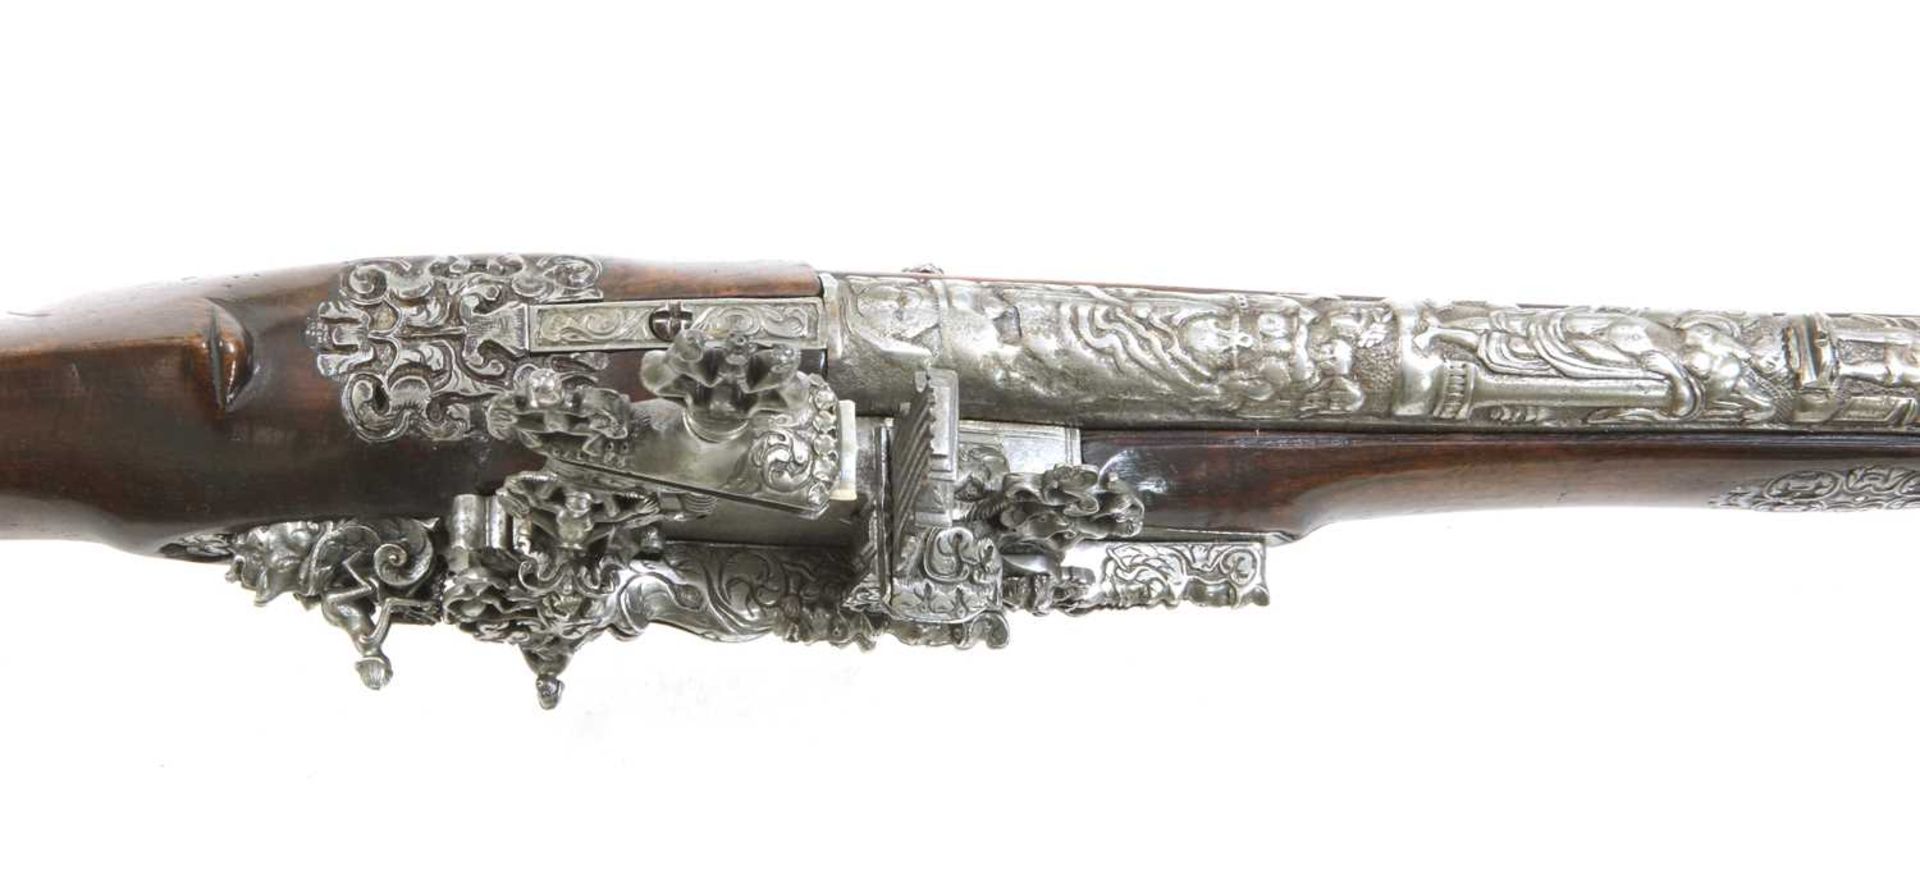 A Brescian Miquelet lock long-barrelled pistol, - Image 5 of 6